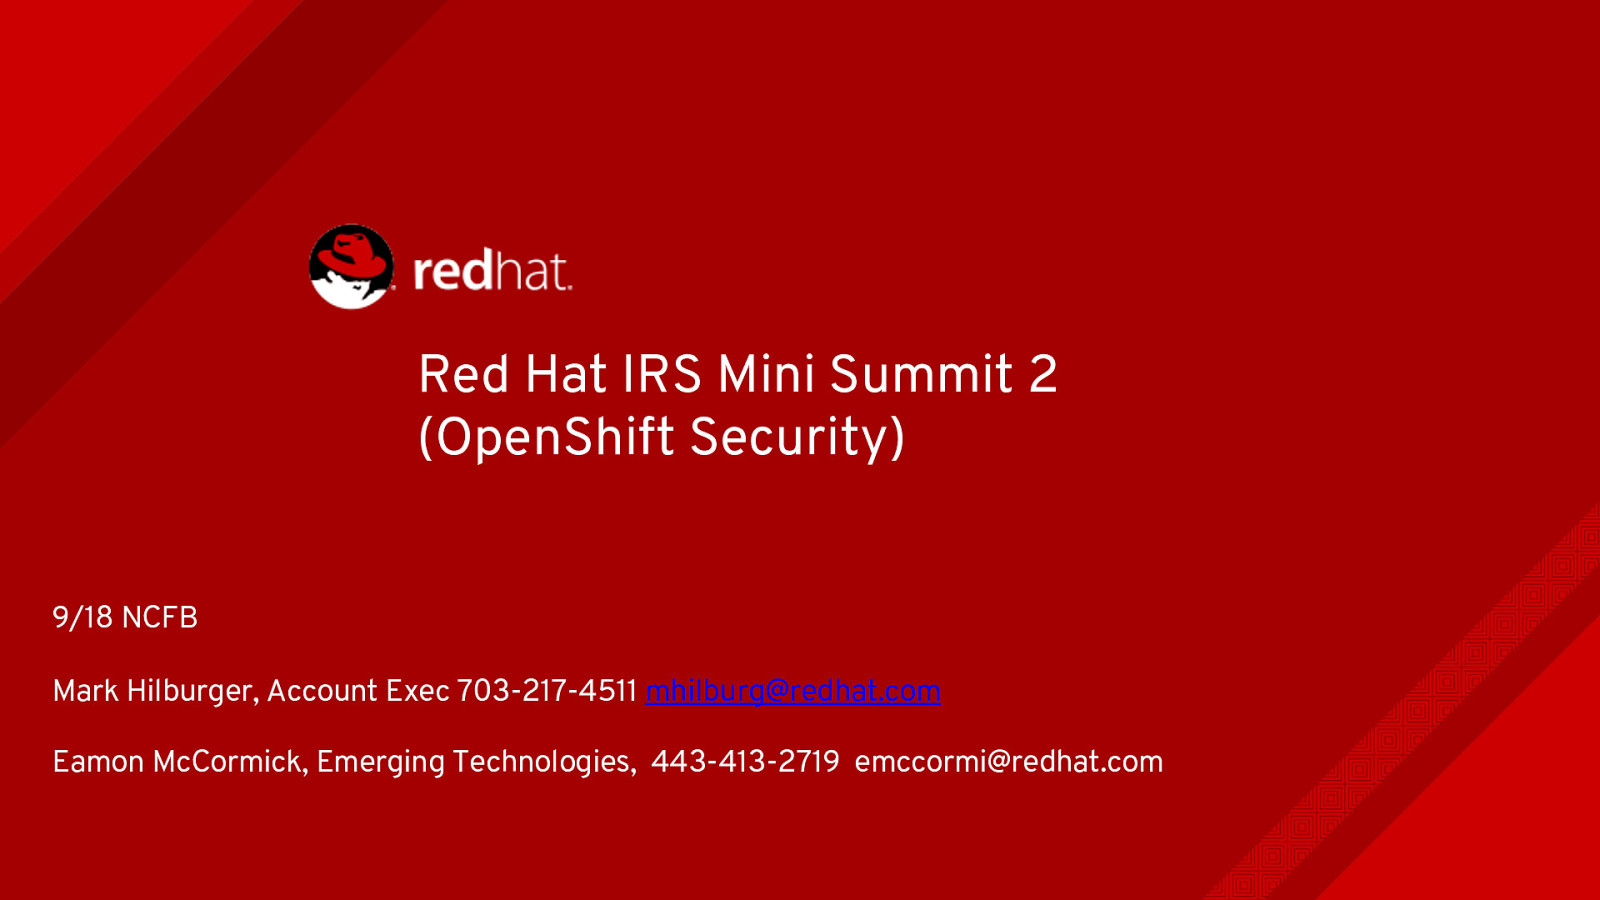 IRS Mini Summit on OpenShift Security